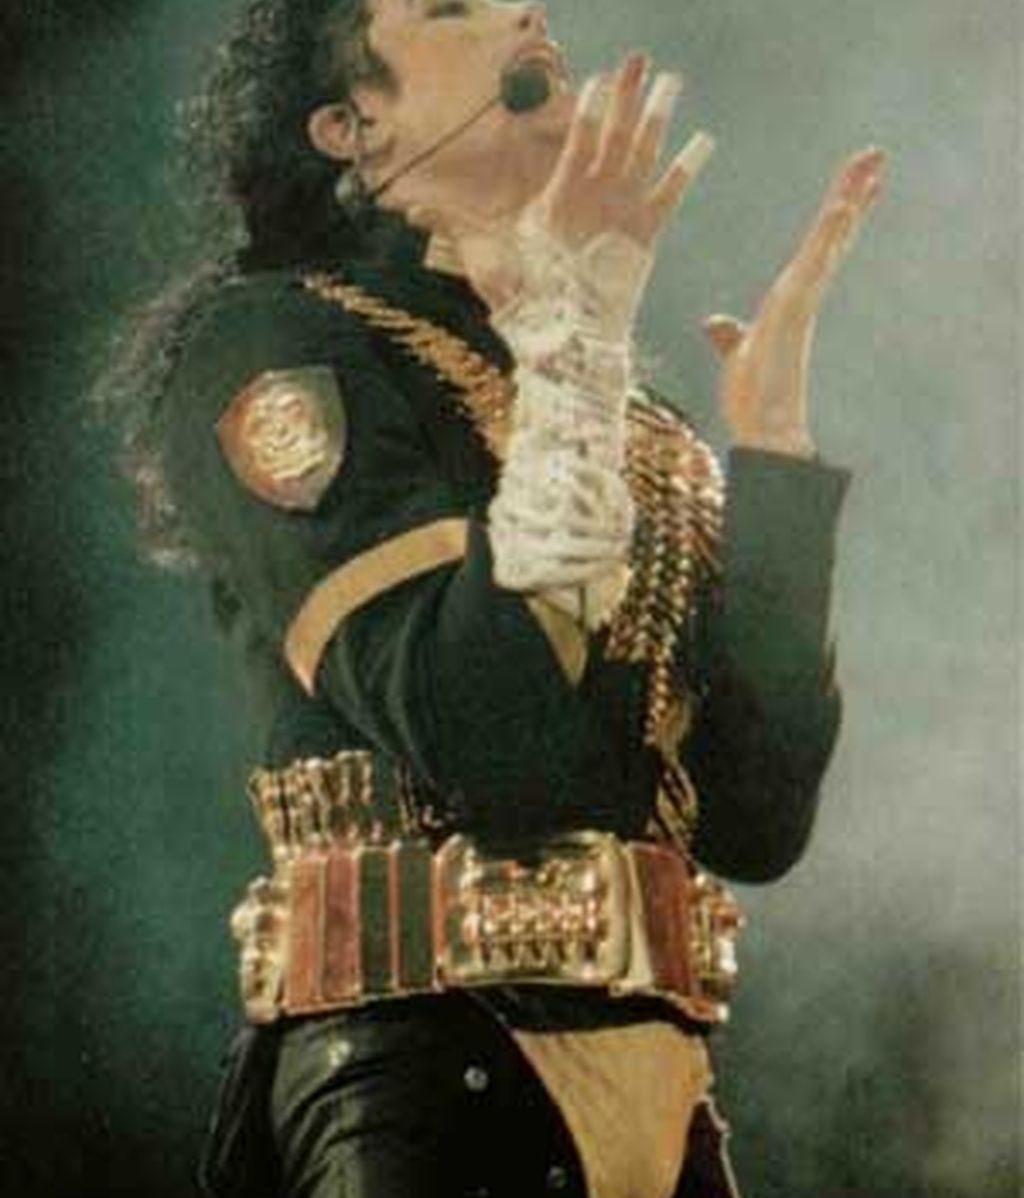 El estilo Michael Jackson